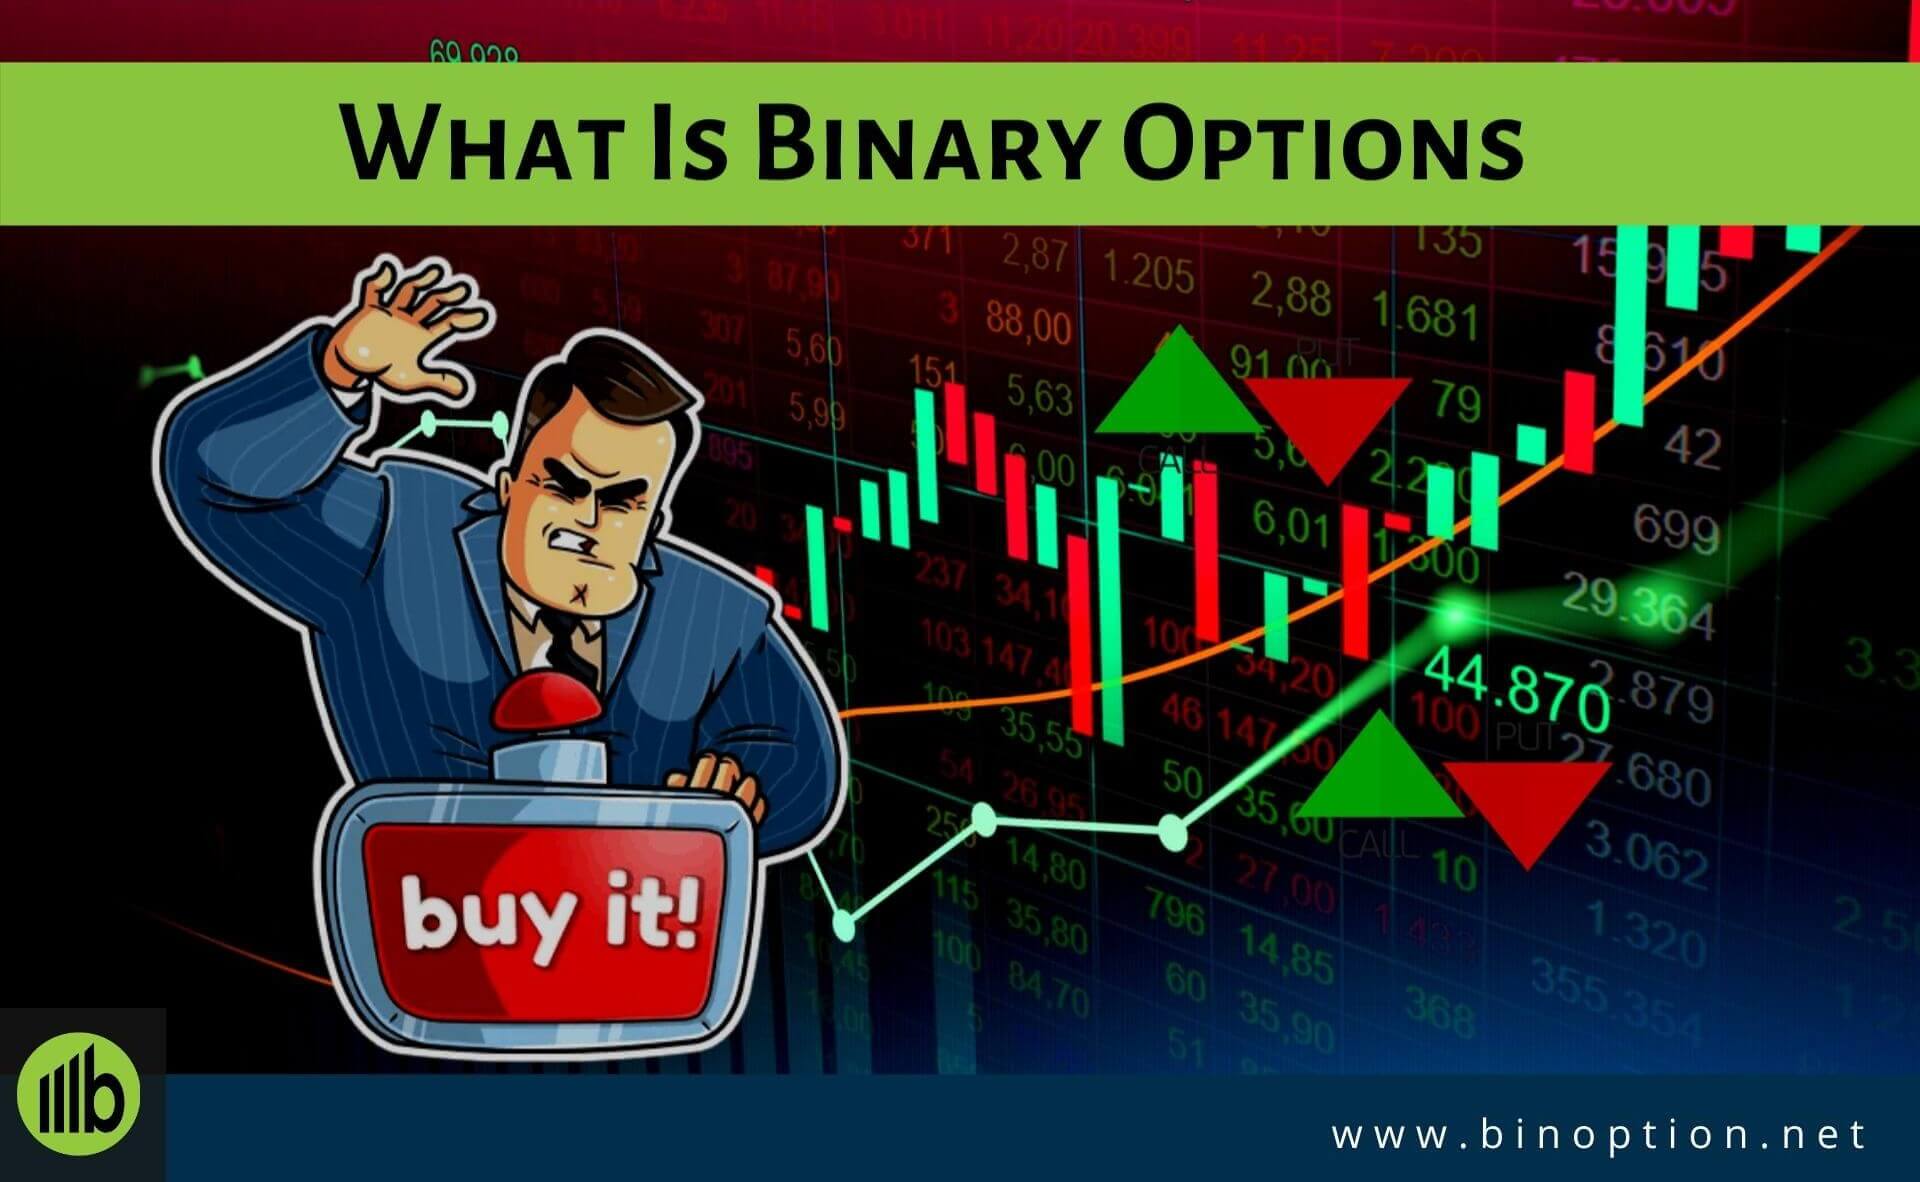 How to trade binary options 2020